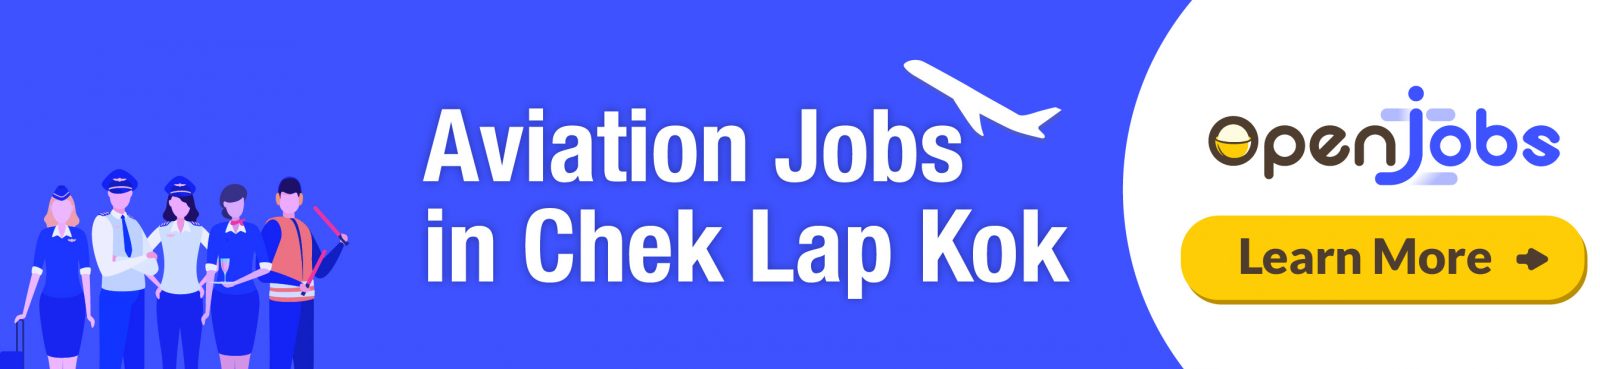 Jobs Landing Banner - Aviation Themepage